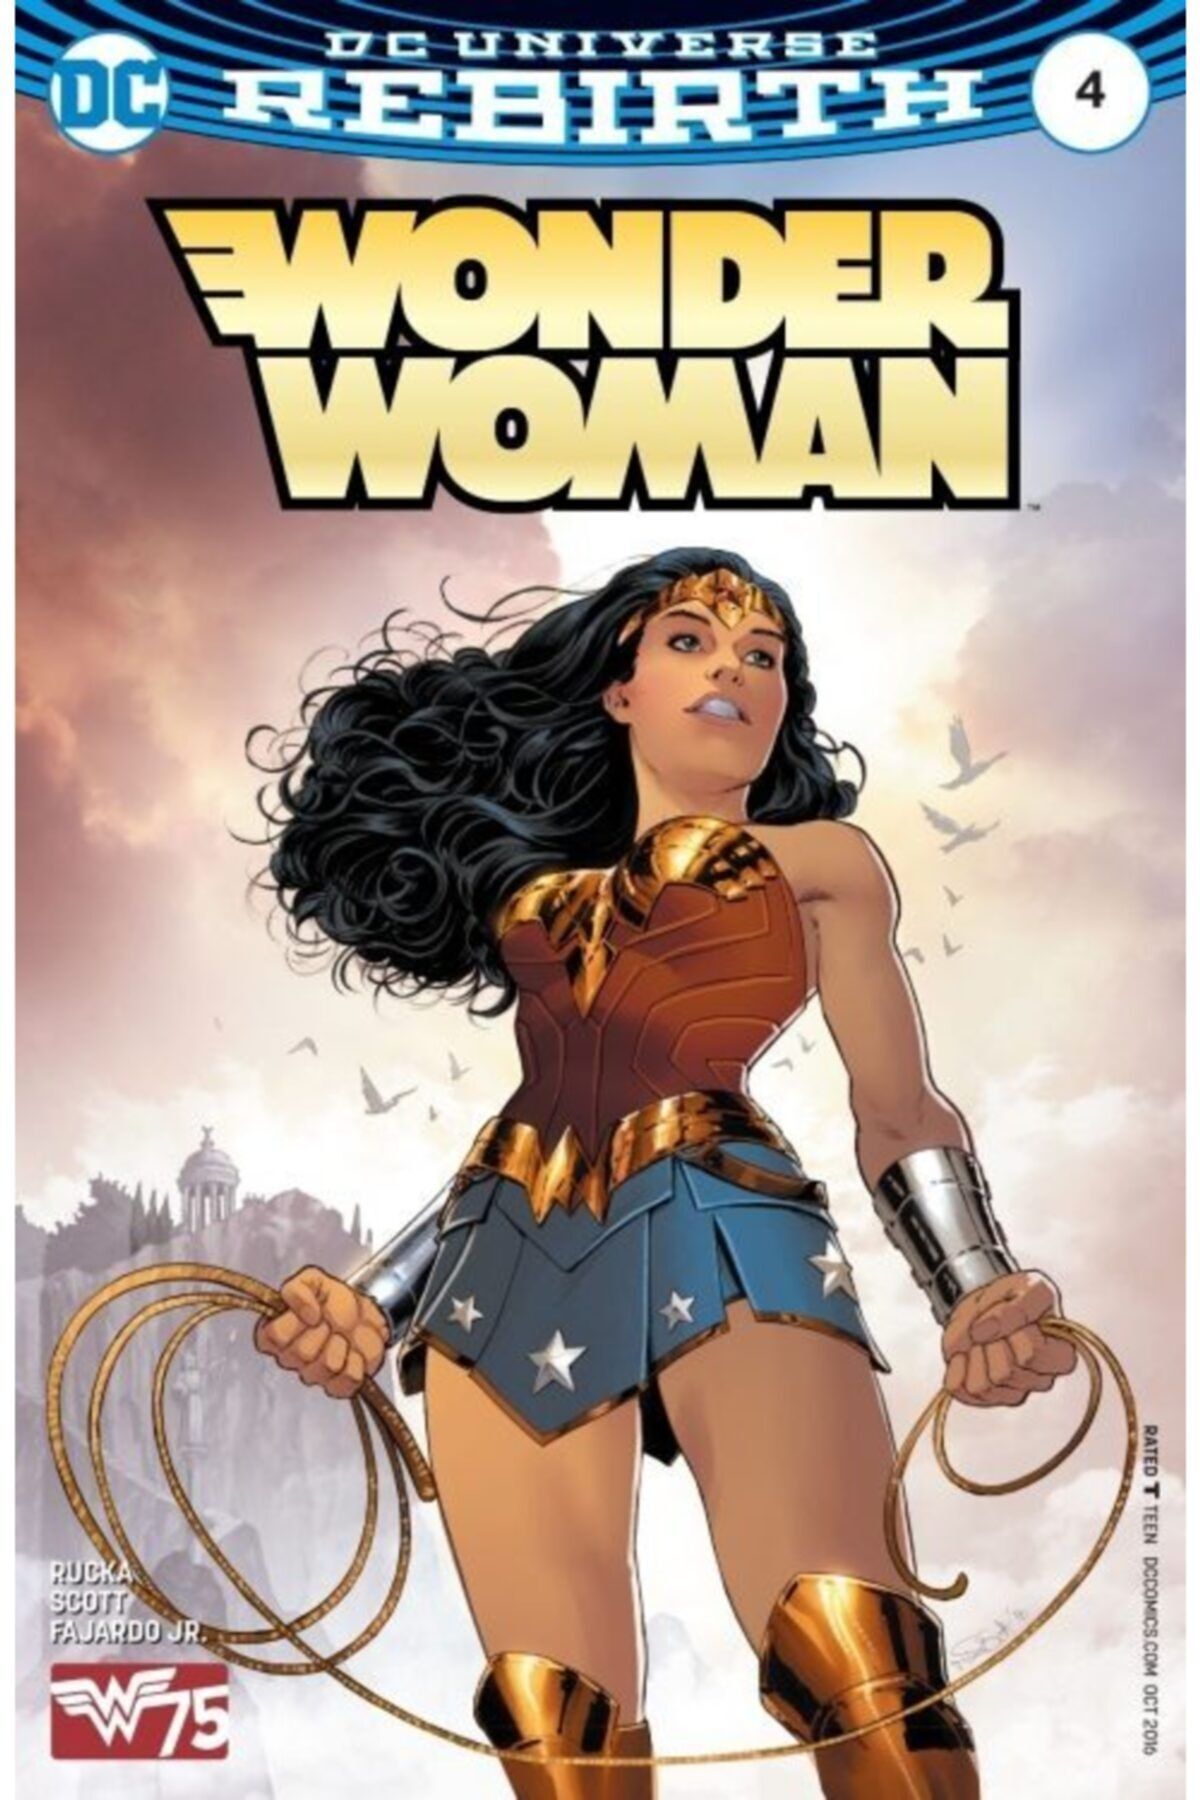 TM & DC Comics-Warner Bros Dc Universe Rebirth Wonder Woman (2016-) #4 Fasikül Ingilizce Çizgi Roman